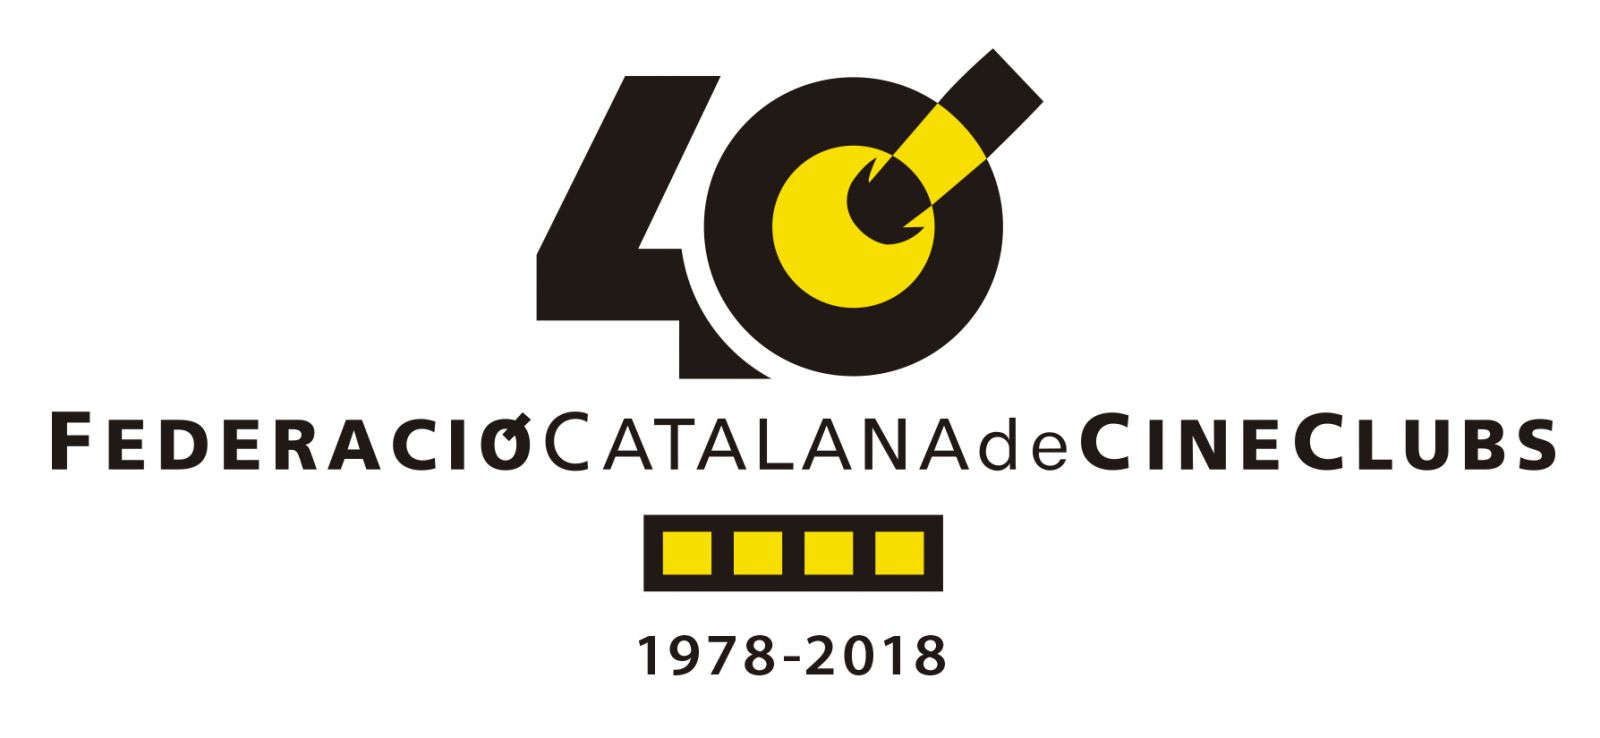 Federacio Catalana de Cineclubs